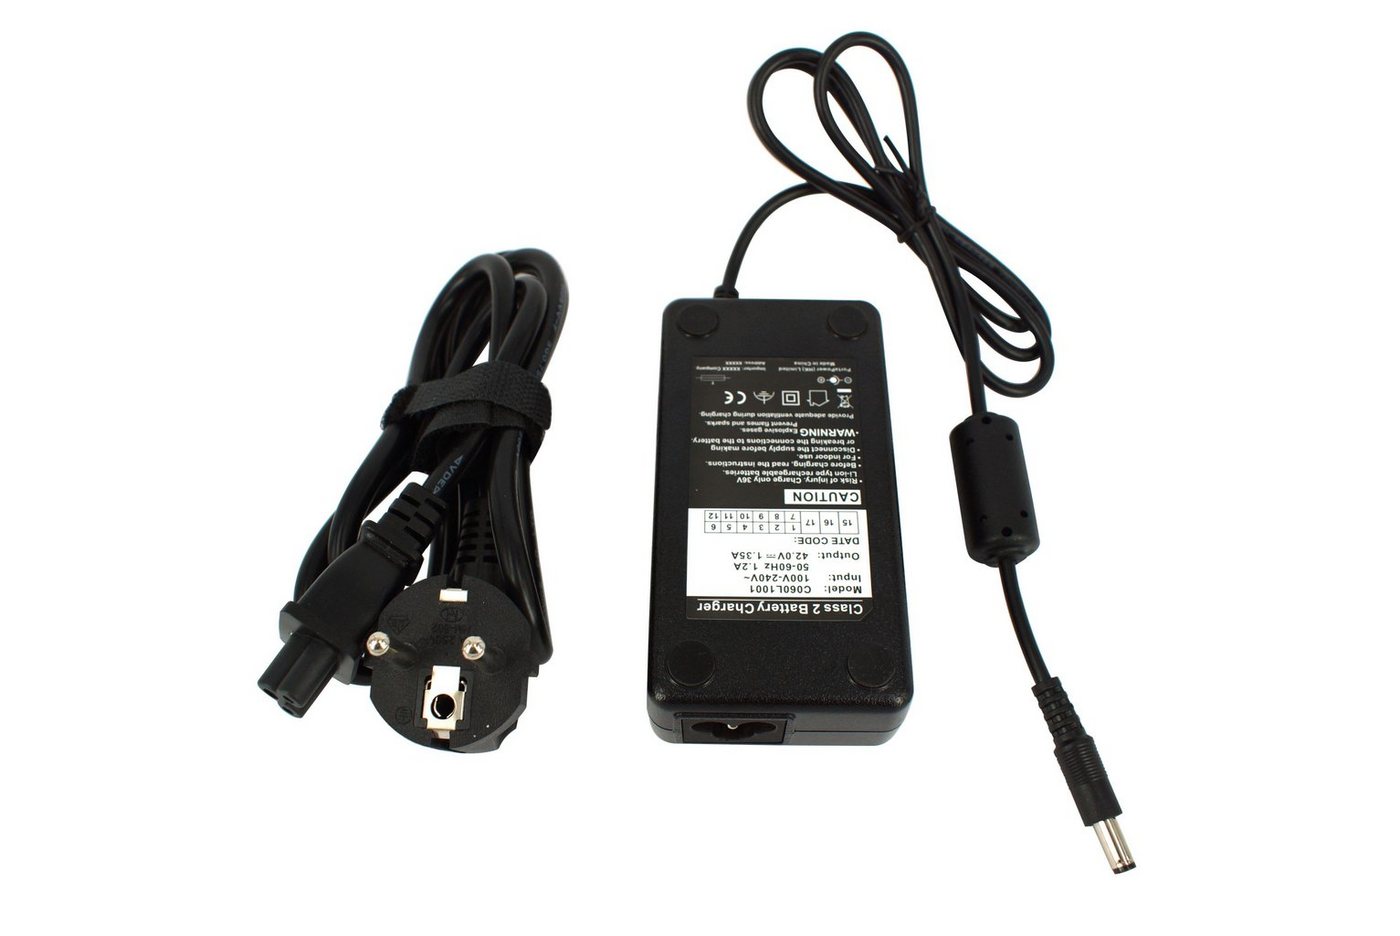 PowerSmart 5.5*2.1 mm LEB36HS92B Batterie-Ladegerät (Pedelec für E-bike Akkus 36V C060L1001) von PowerSmart